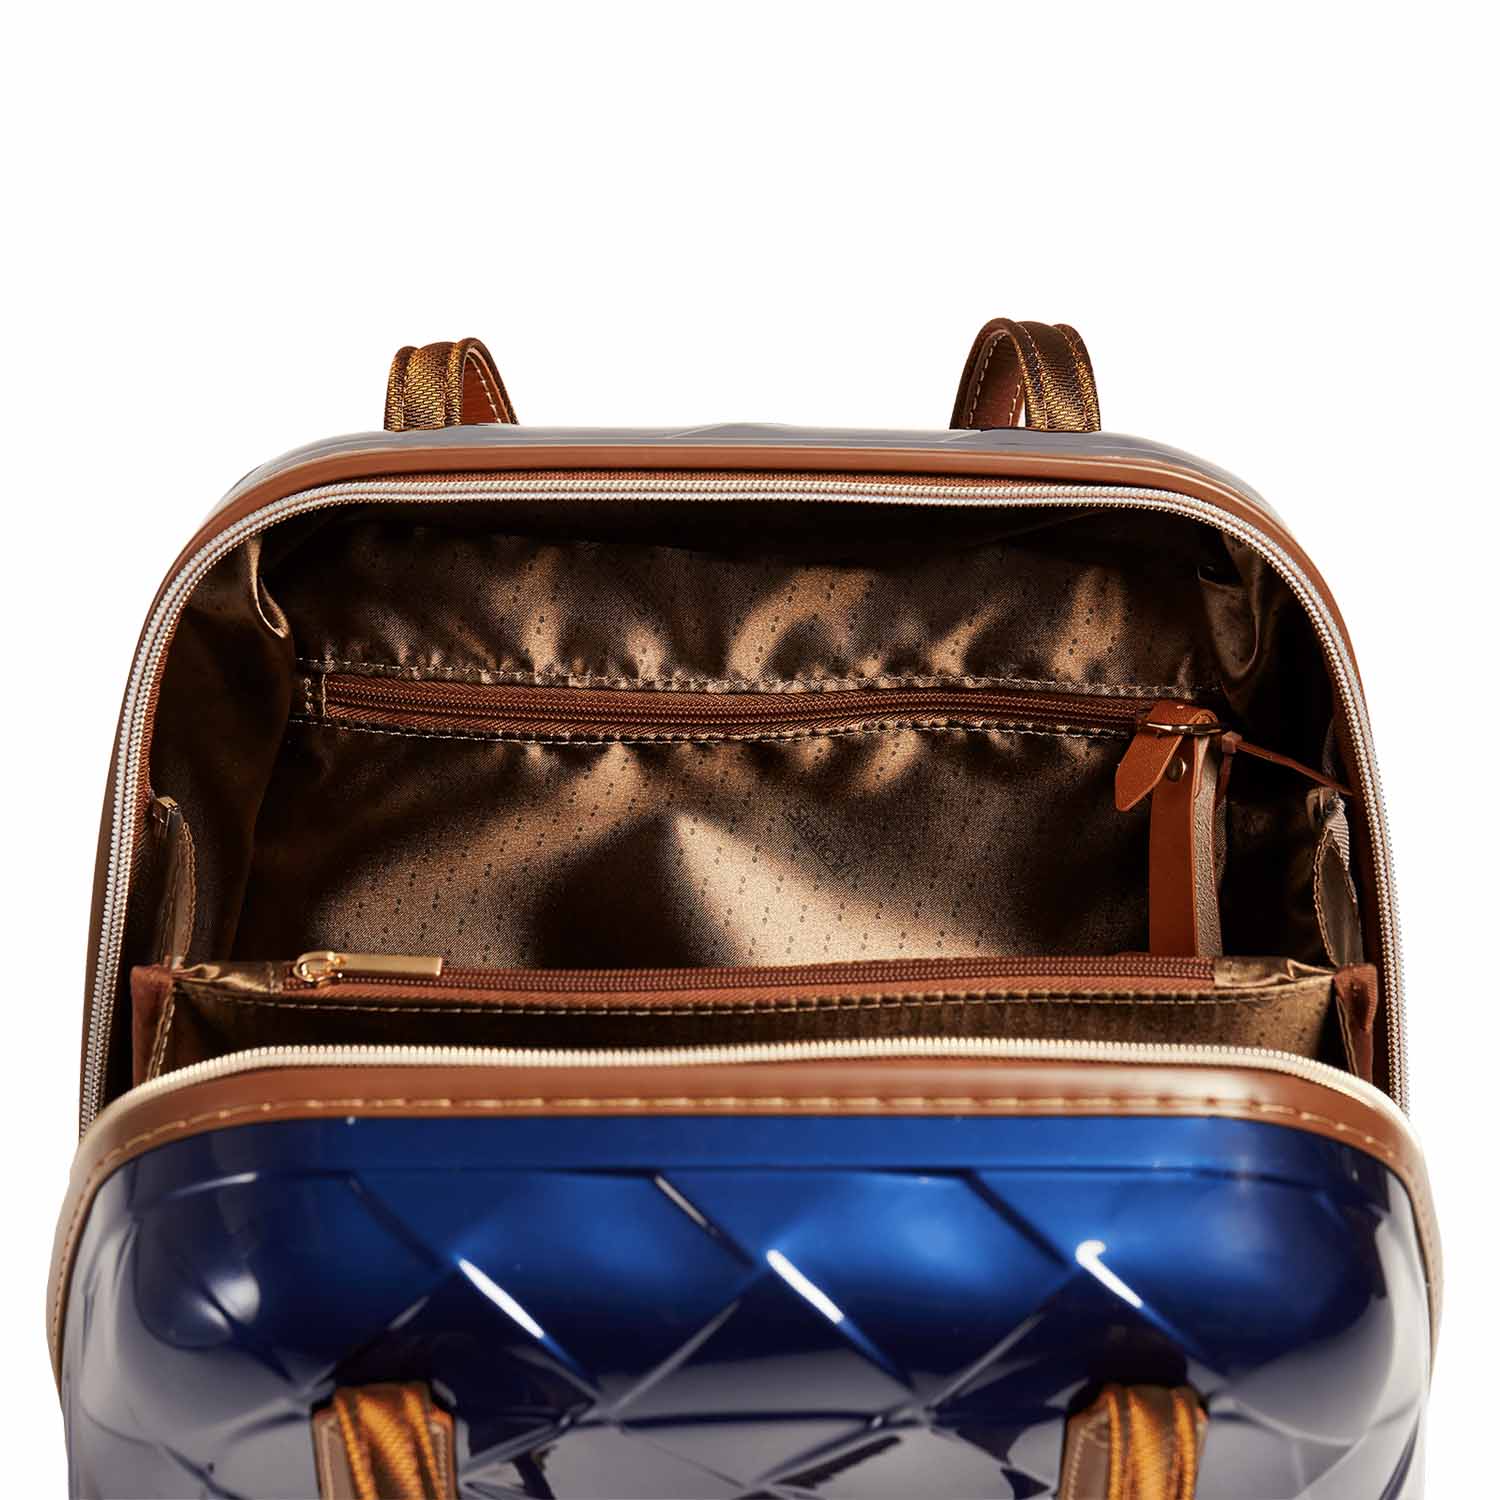 Stratic Leather & More Beauty Case blue | jetzt online kaufen auf Koffer.de  ✓